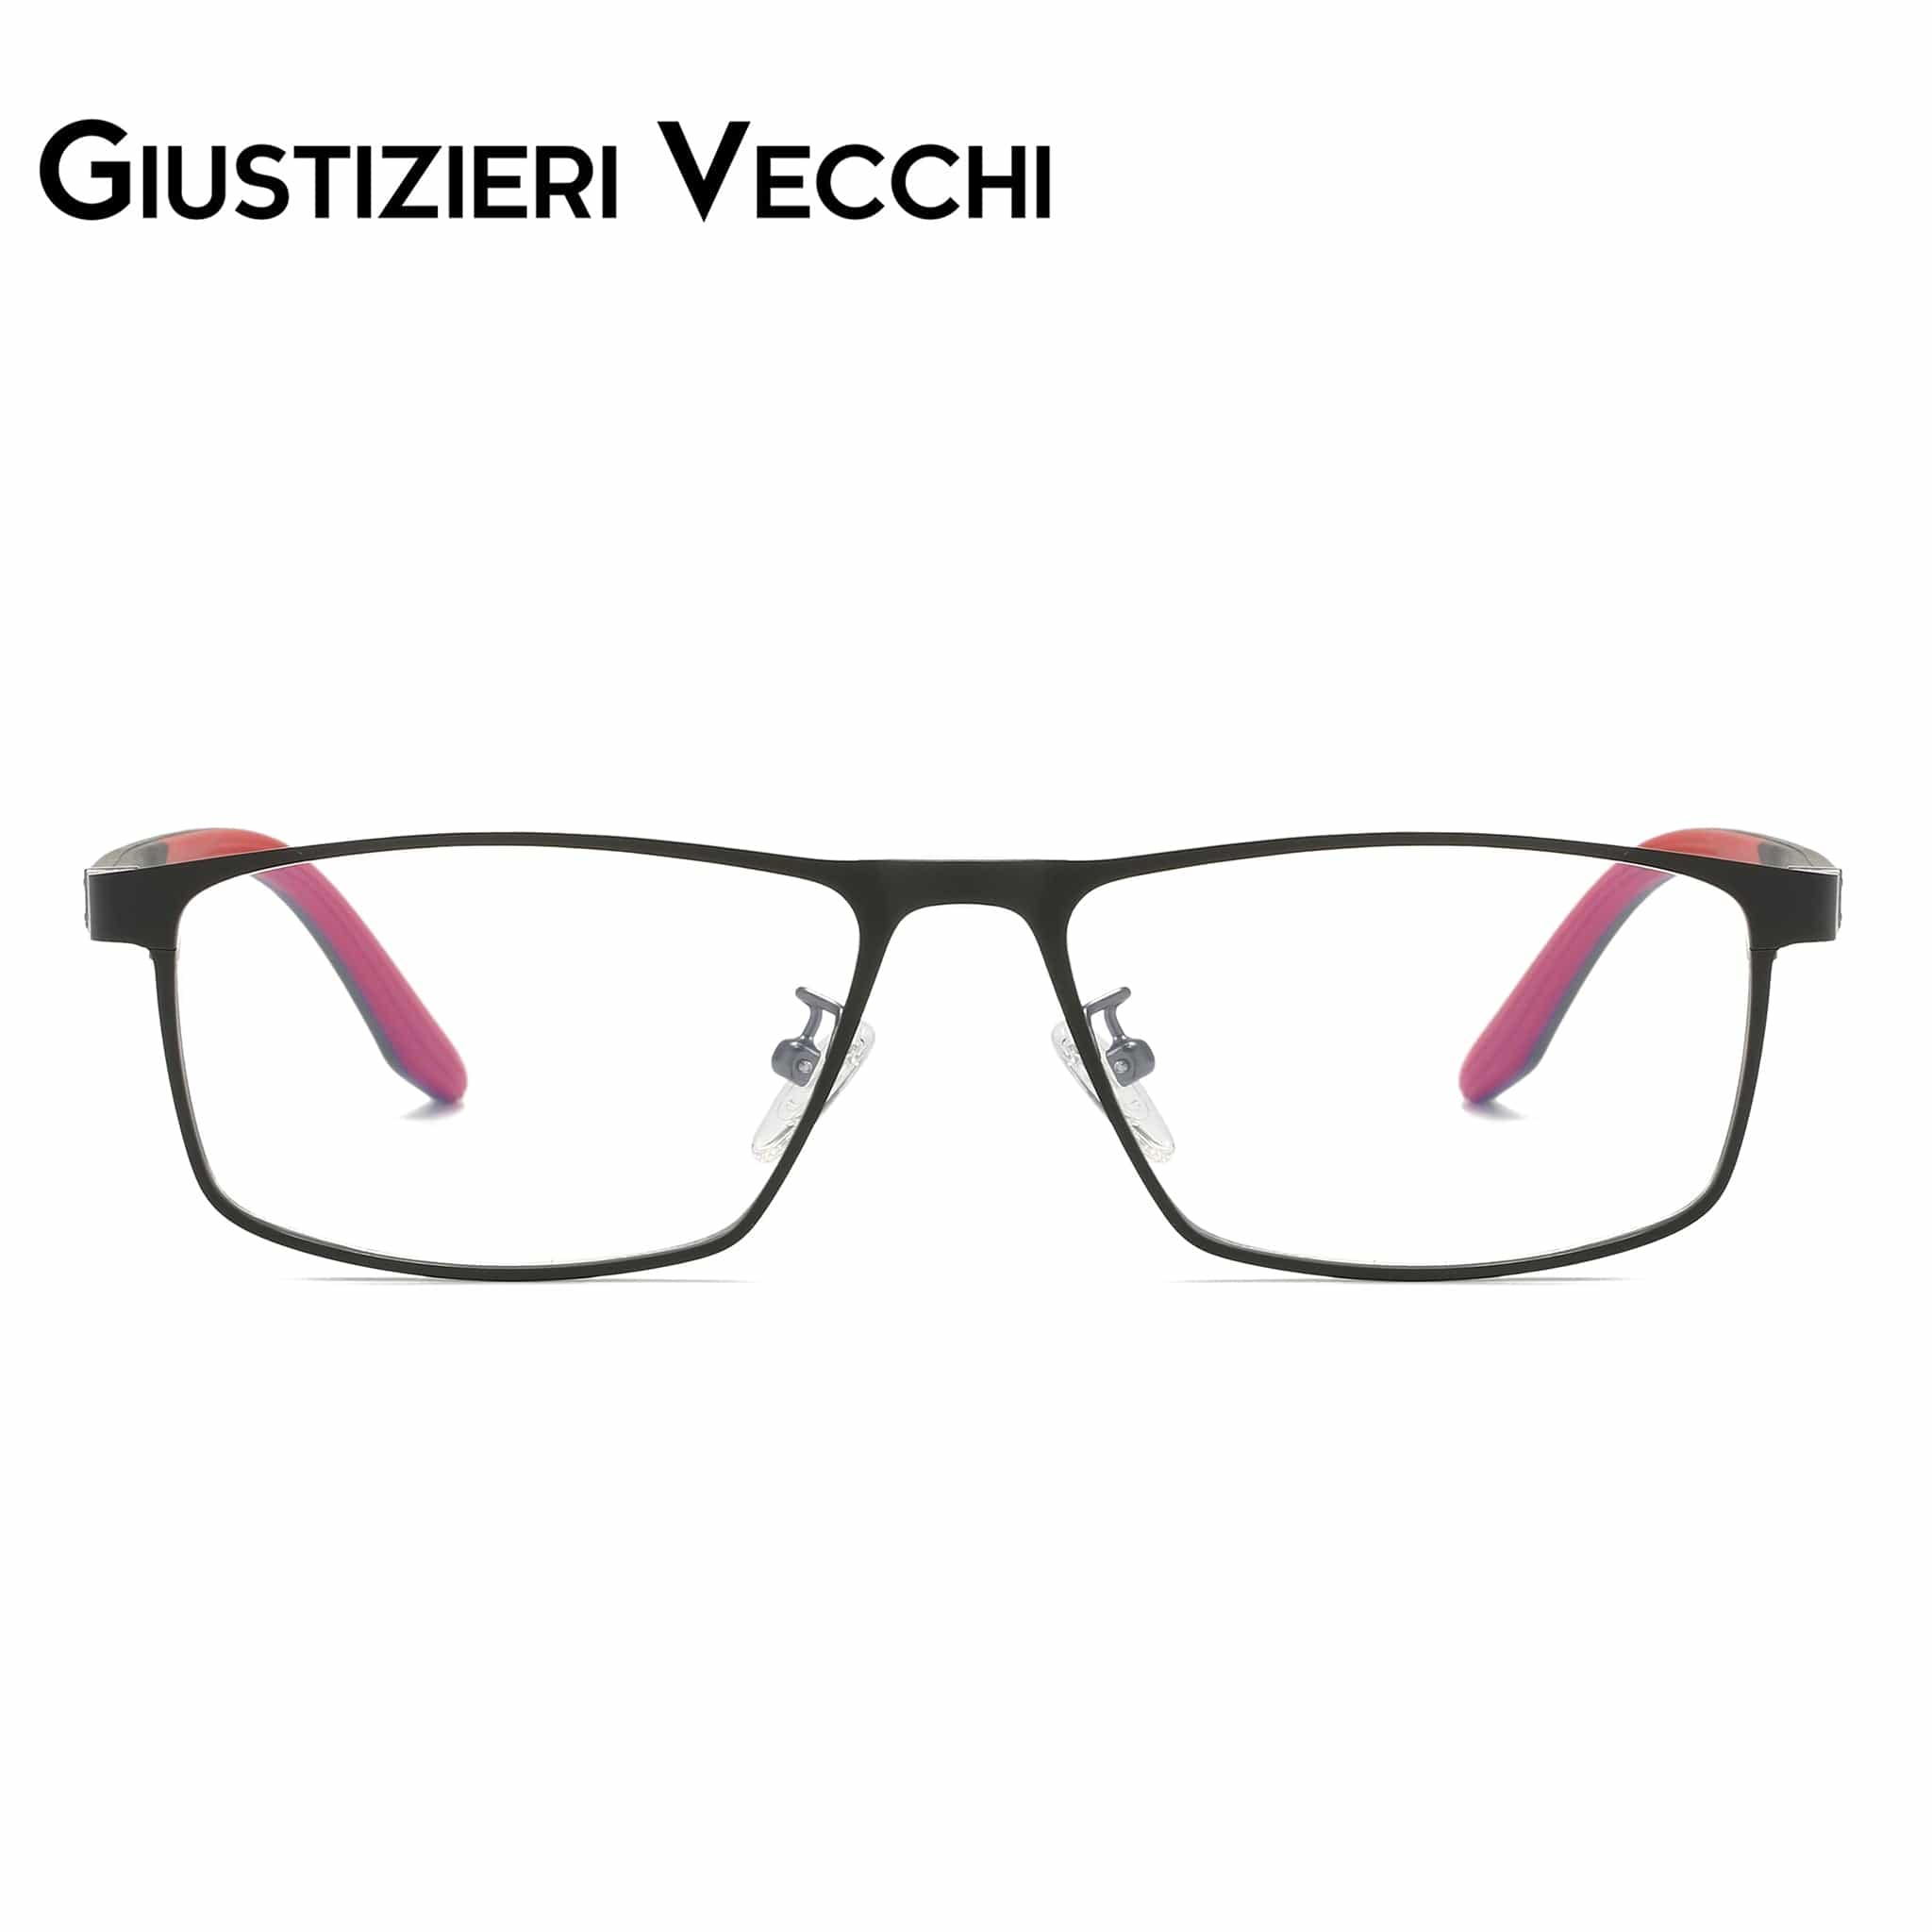 GIUSTIZIERI VECCHI Eyeglasses Large / Black with Red IceStorm Uno